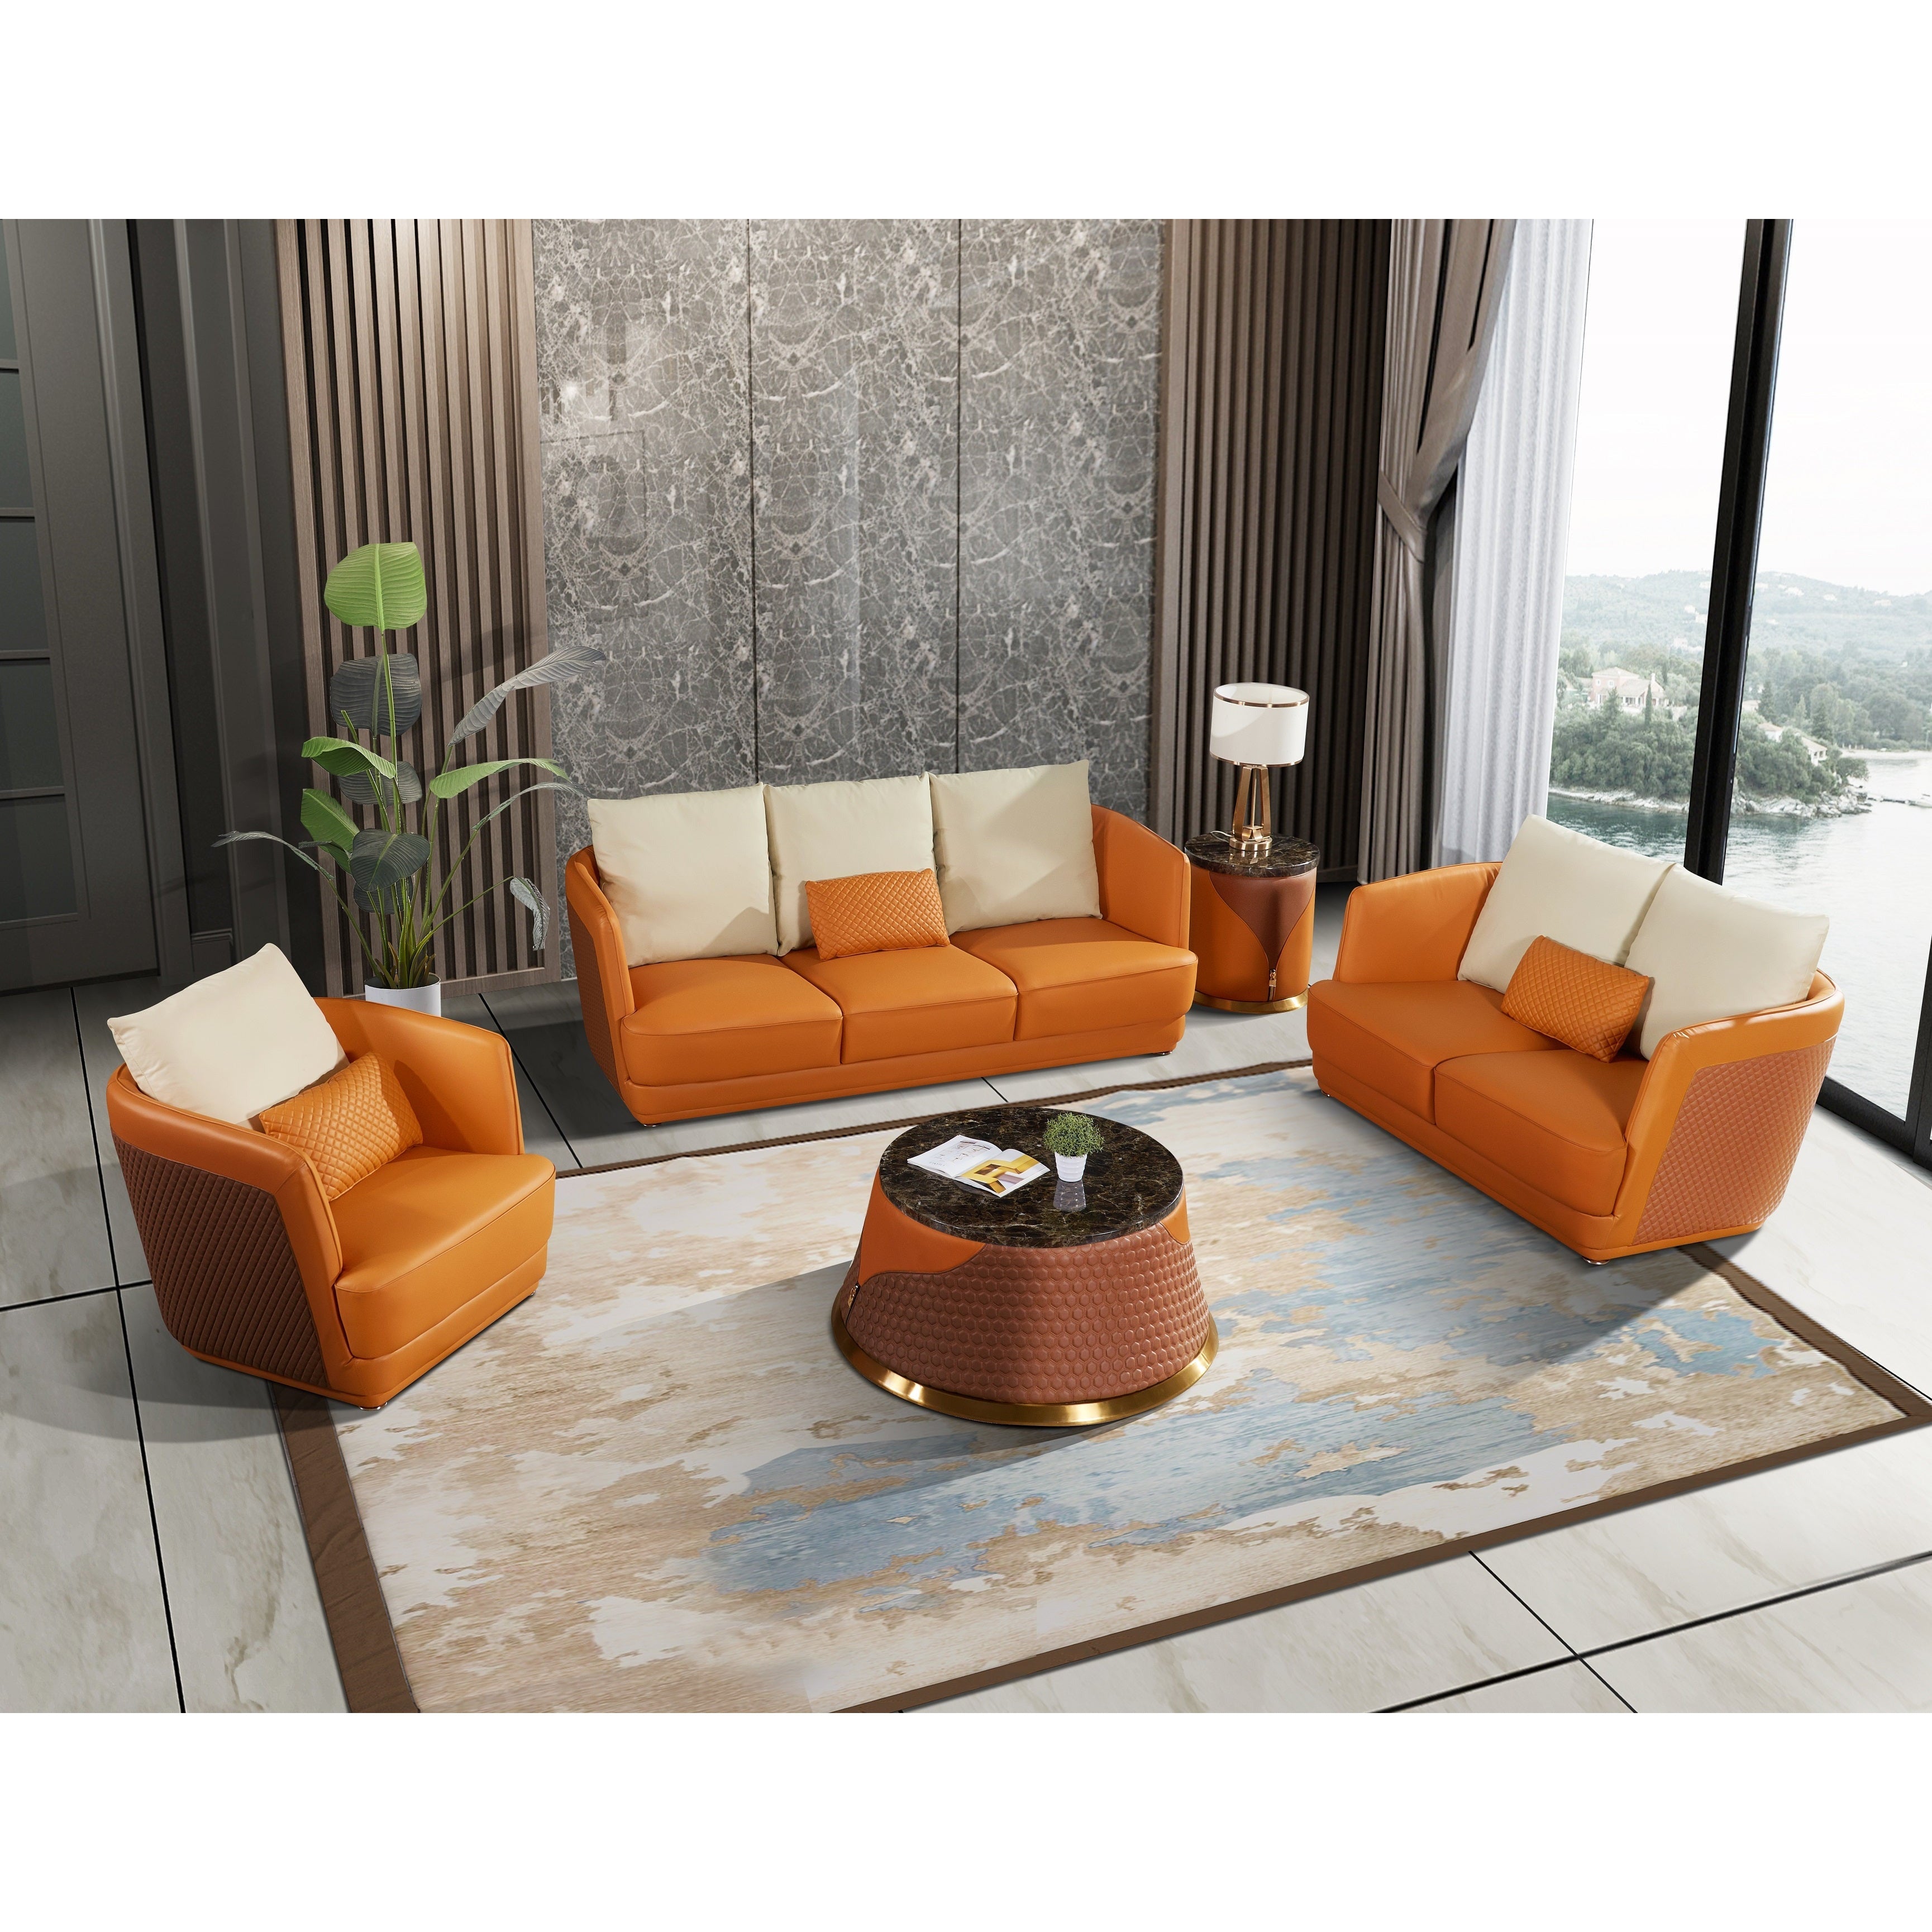 European Furniture - Glamour Loveseat Orange & Brown Italian Leather - EF-51619-L - New Star Living